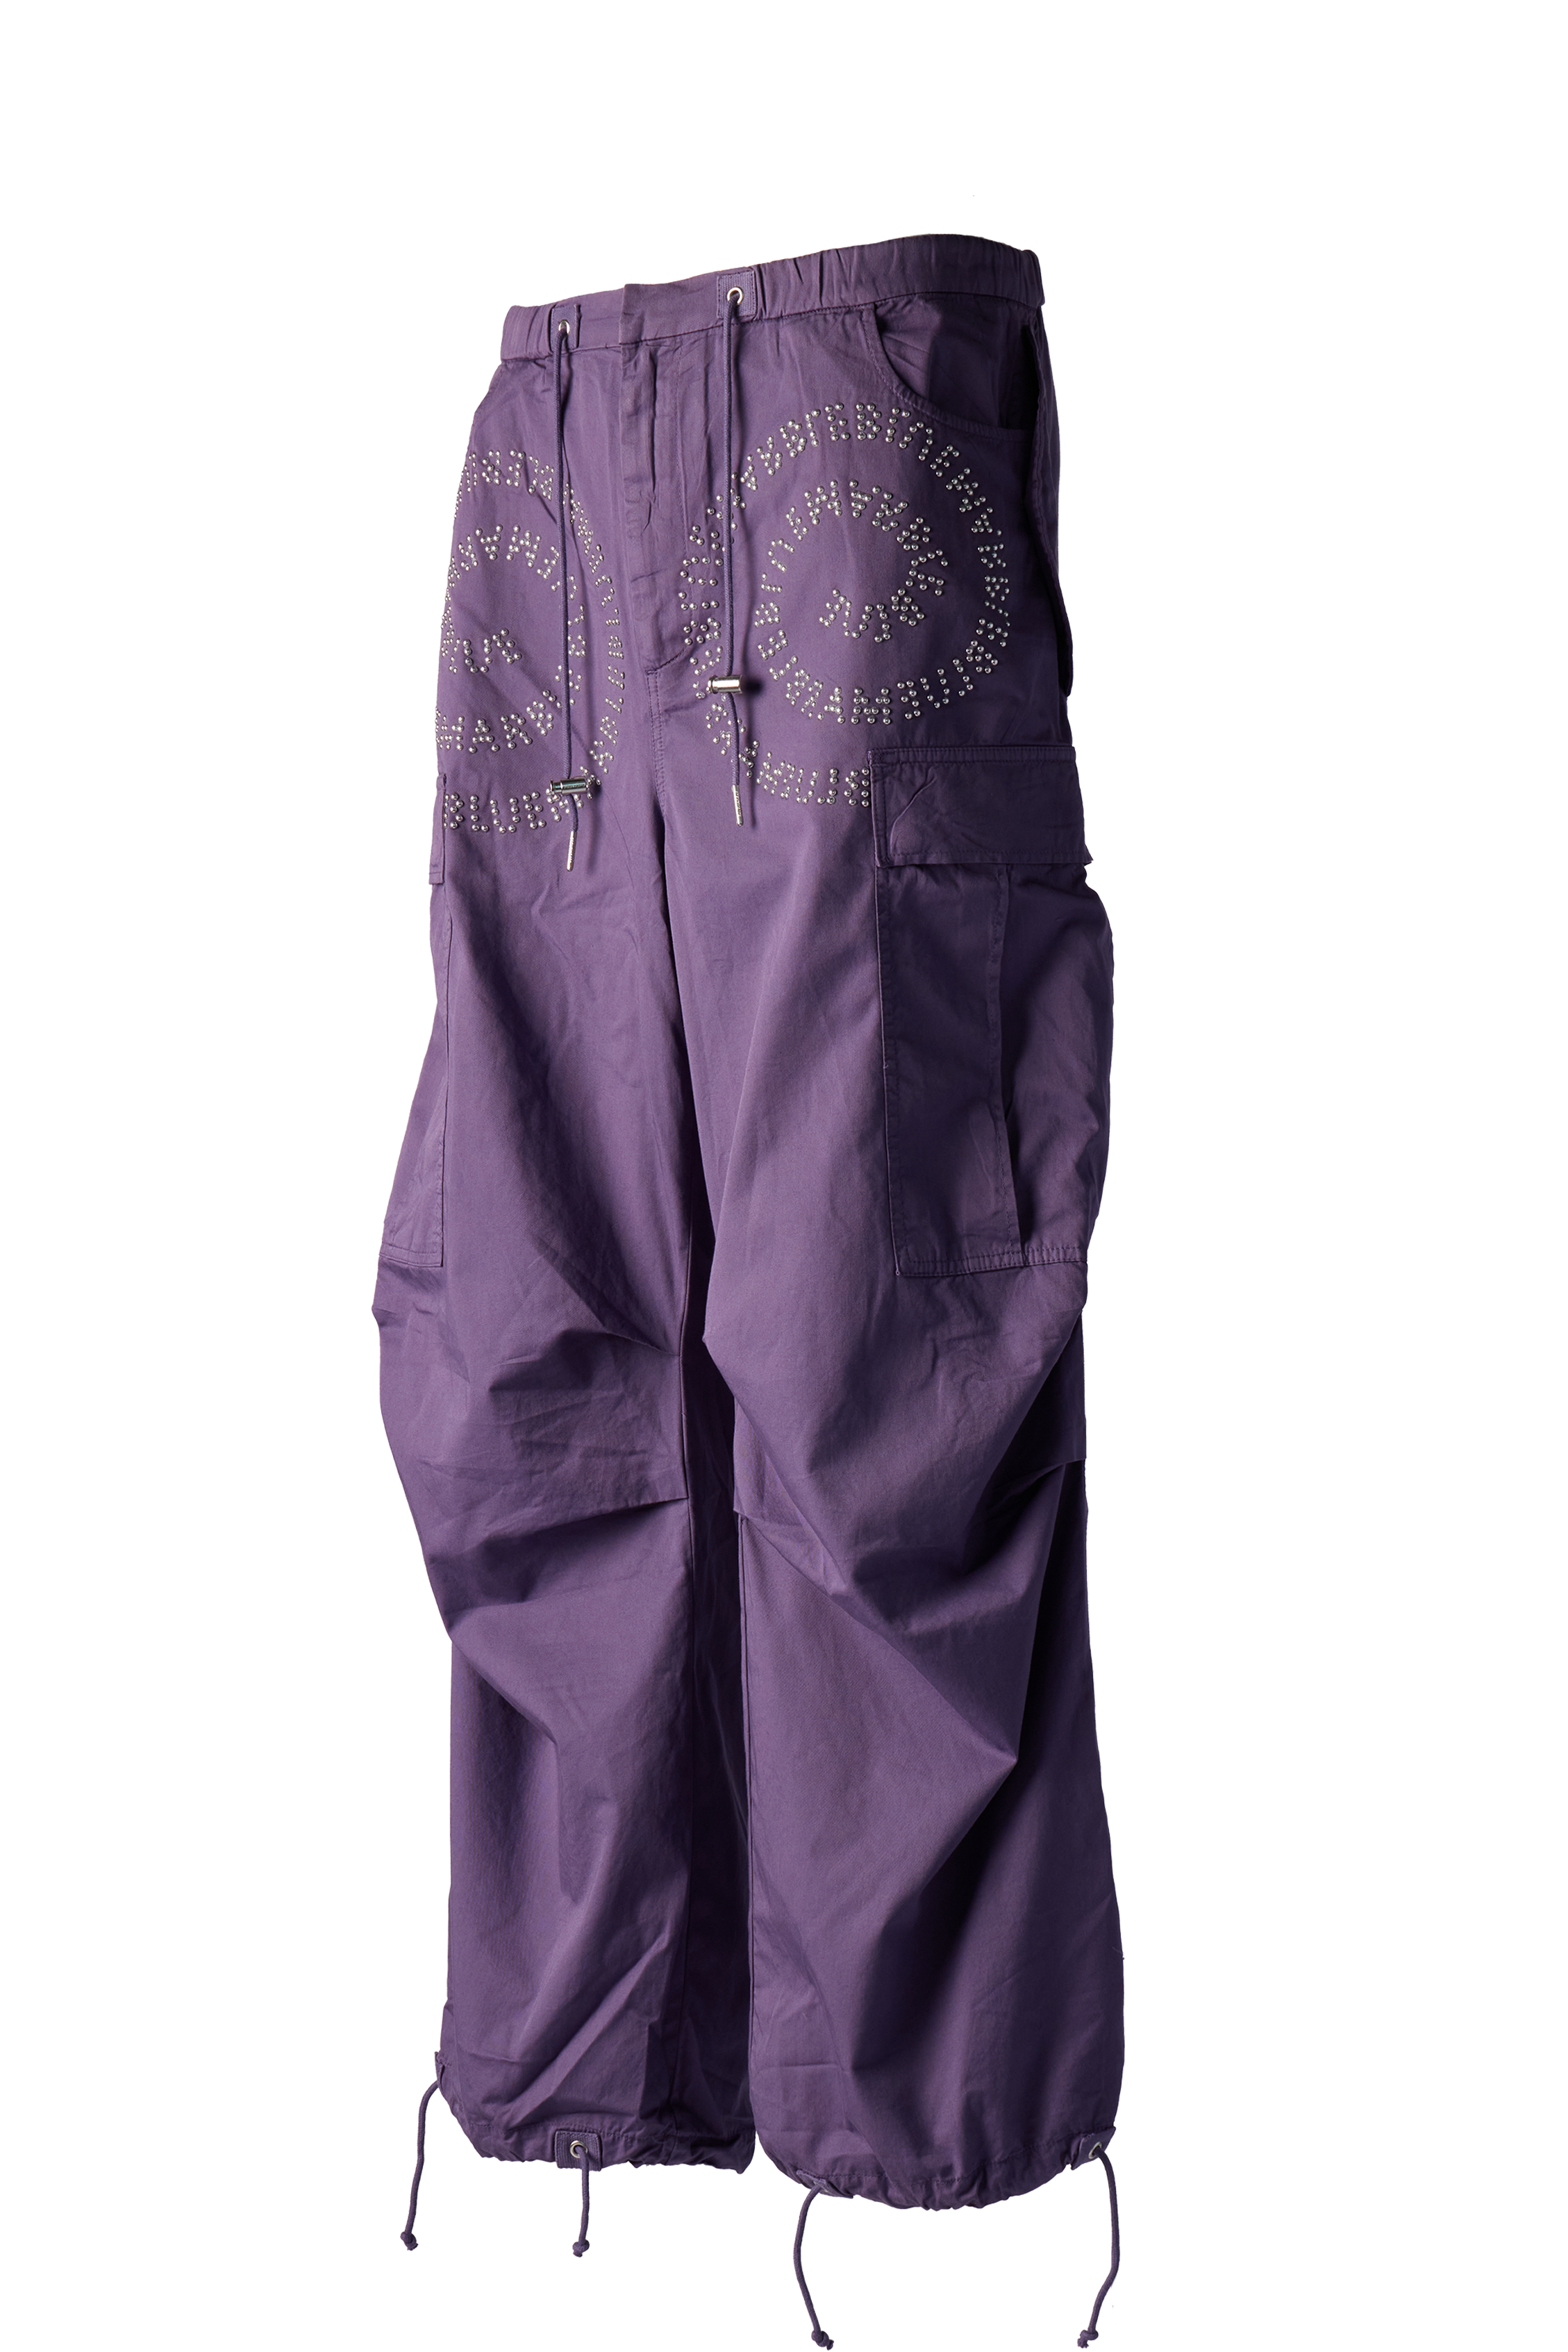 BLUEMARBLE - Studded Cargo Pants product image